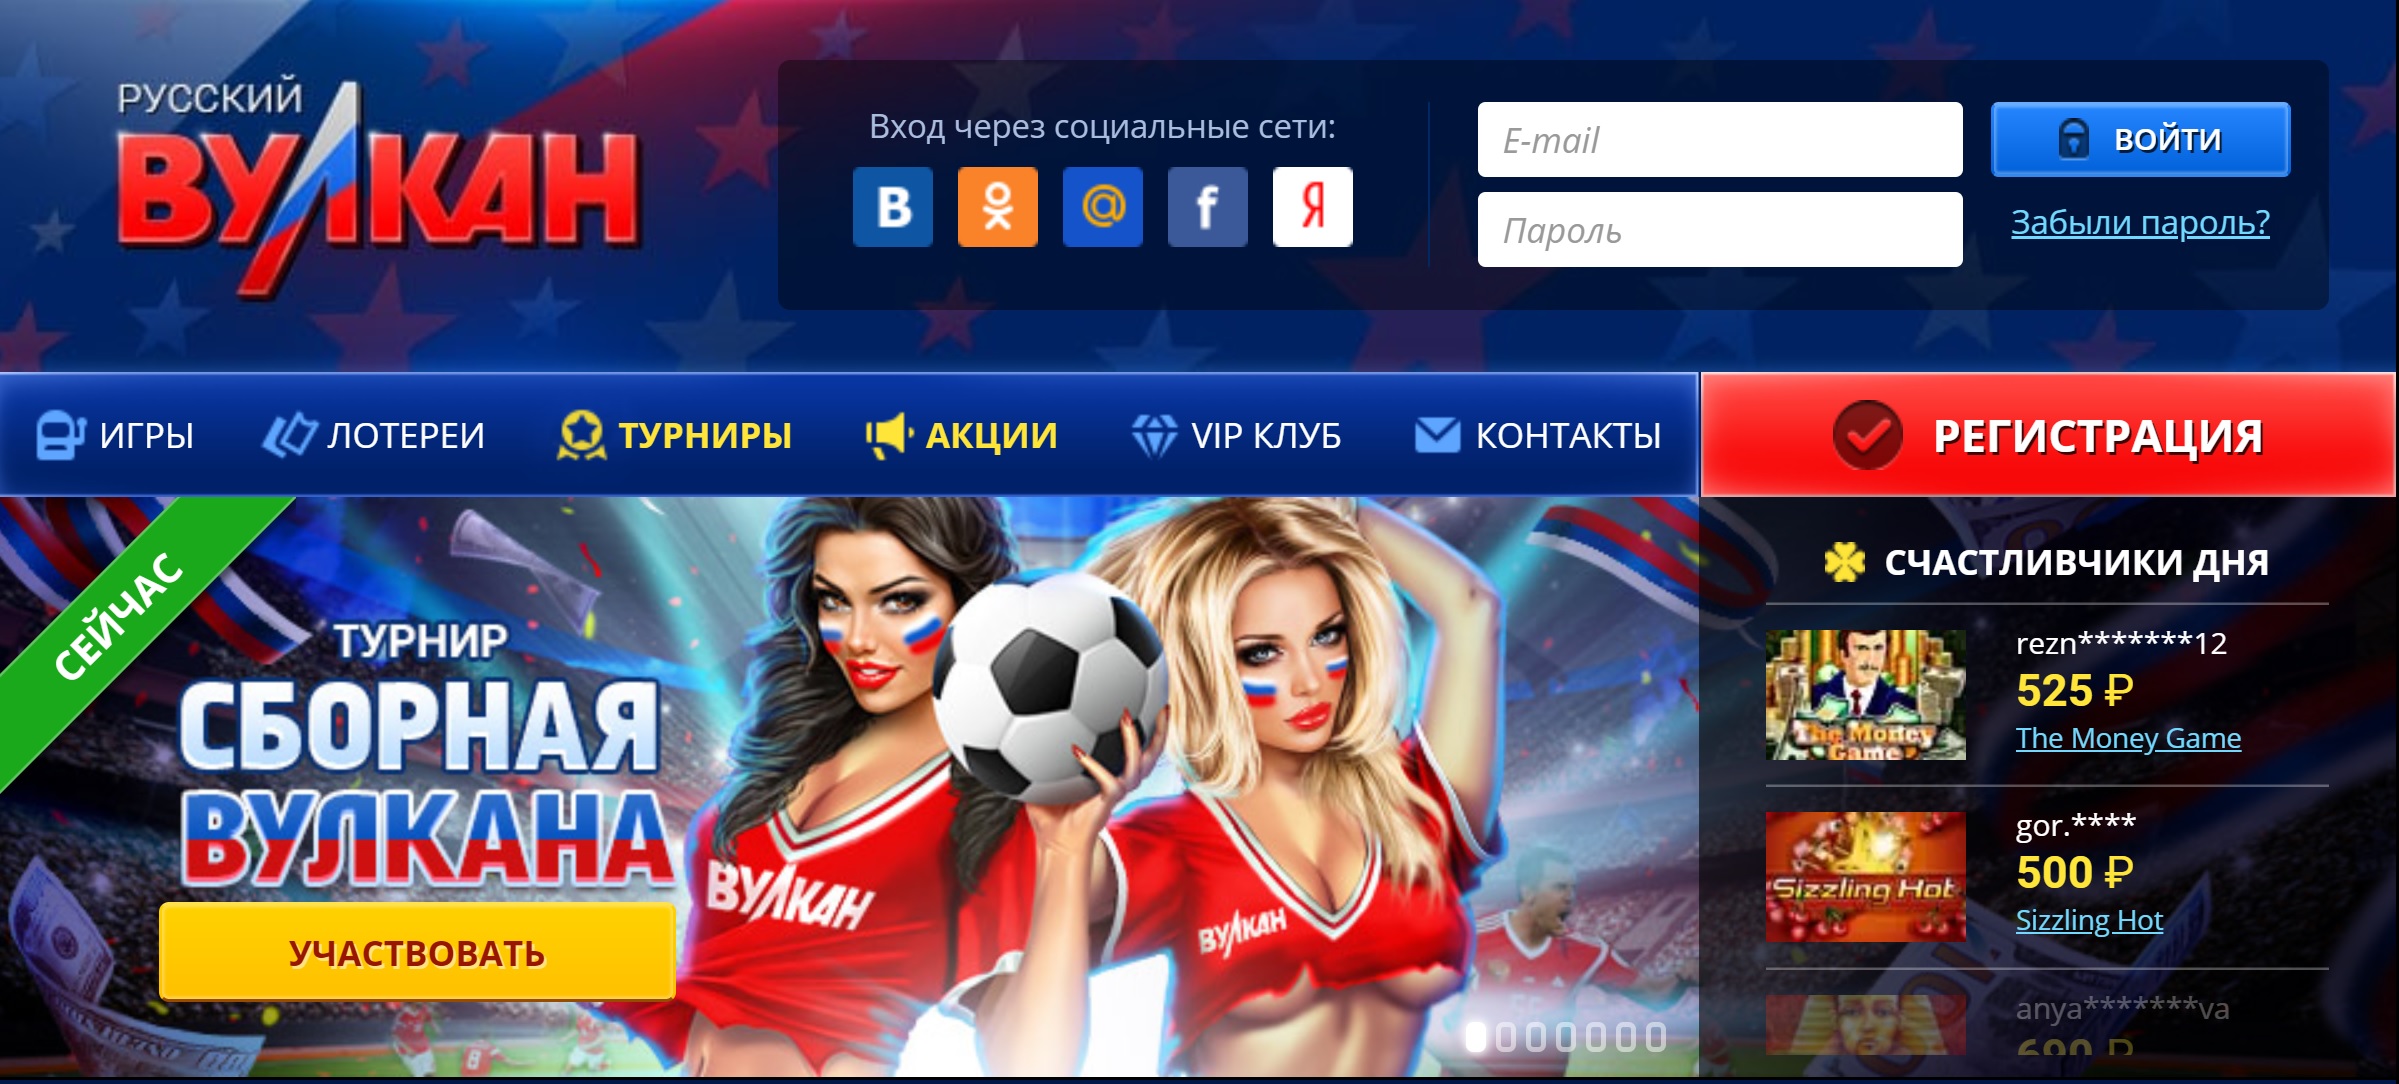 русский вулкан казино онлайн russian vulkan club com